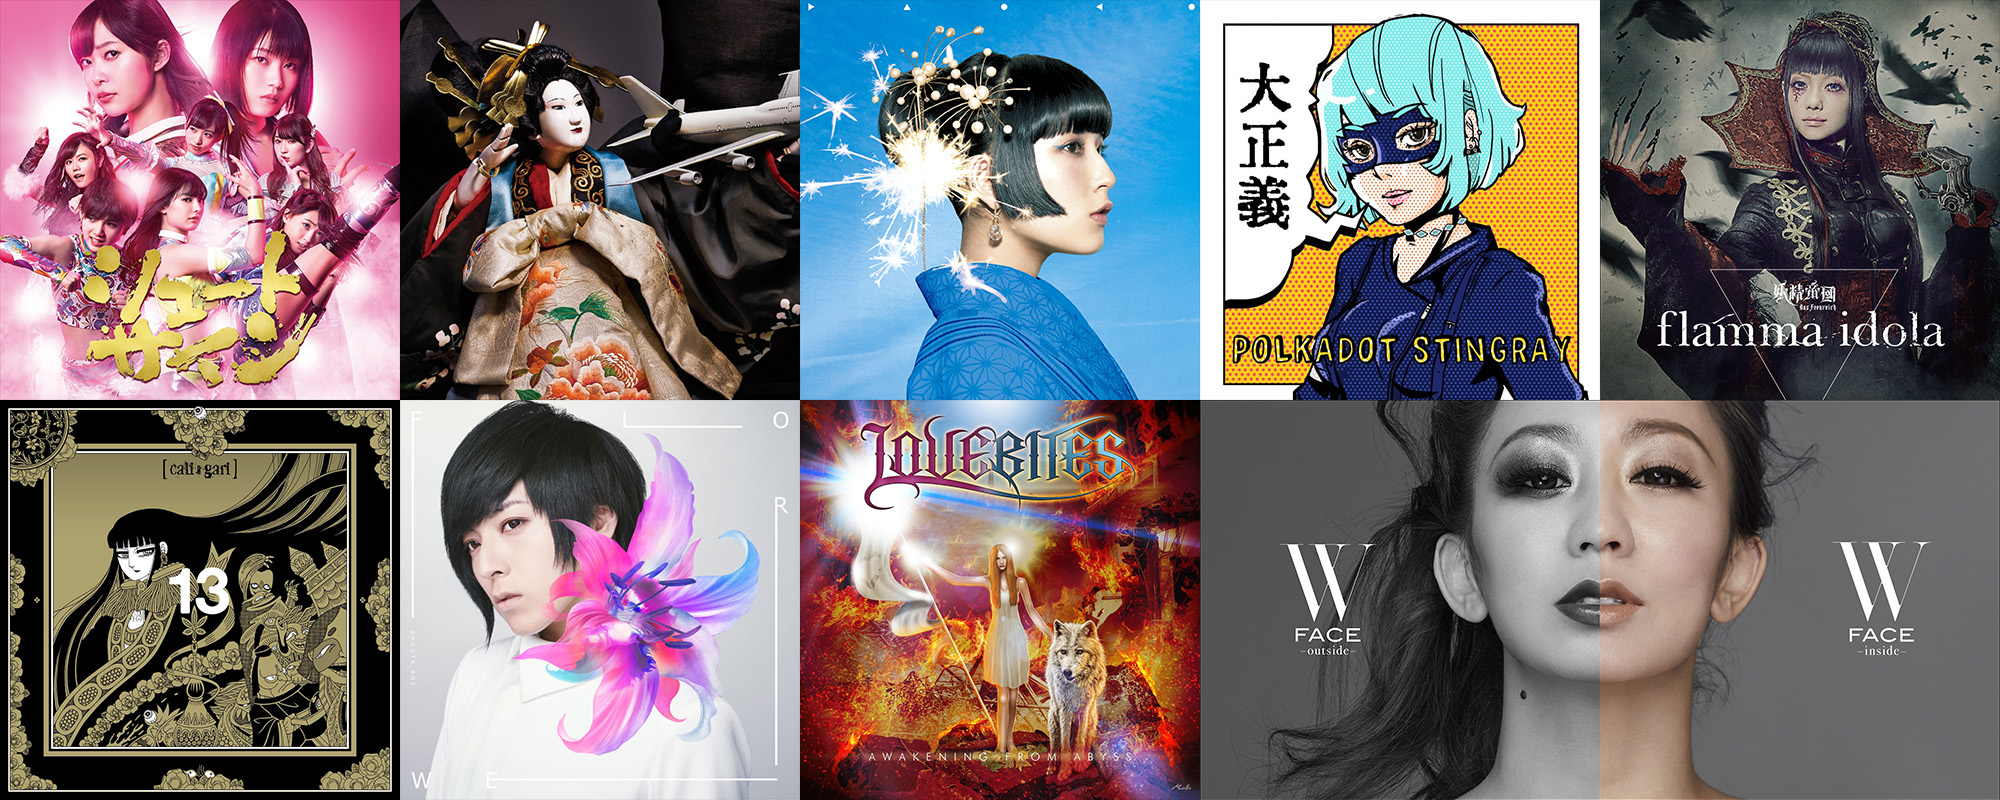 Best J-Pop J-Rock album covers 2017